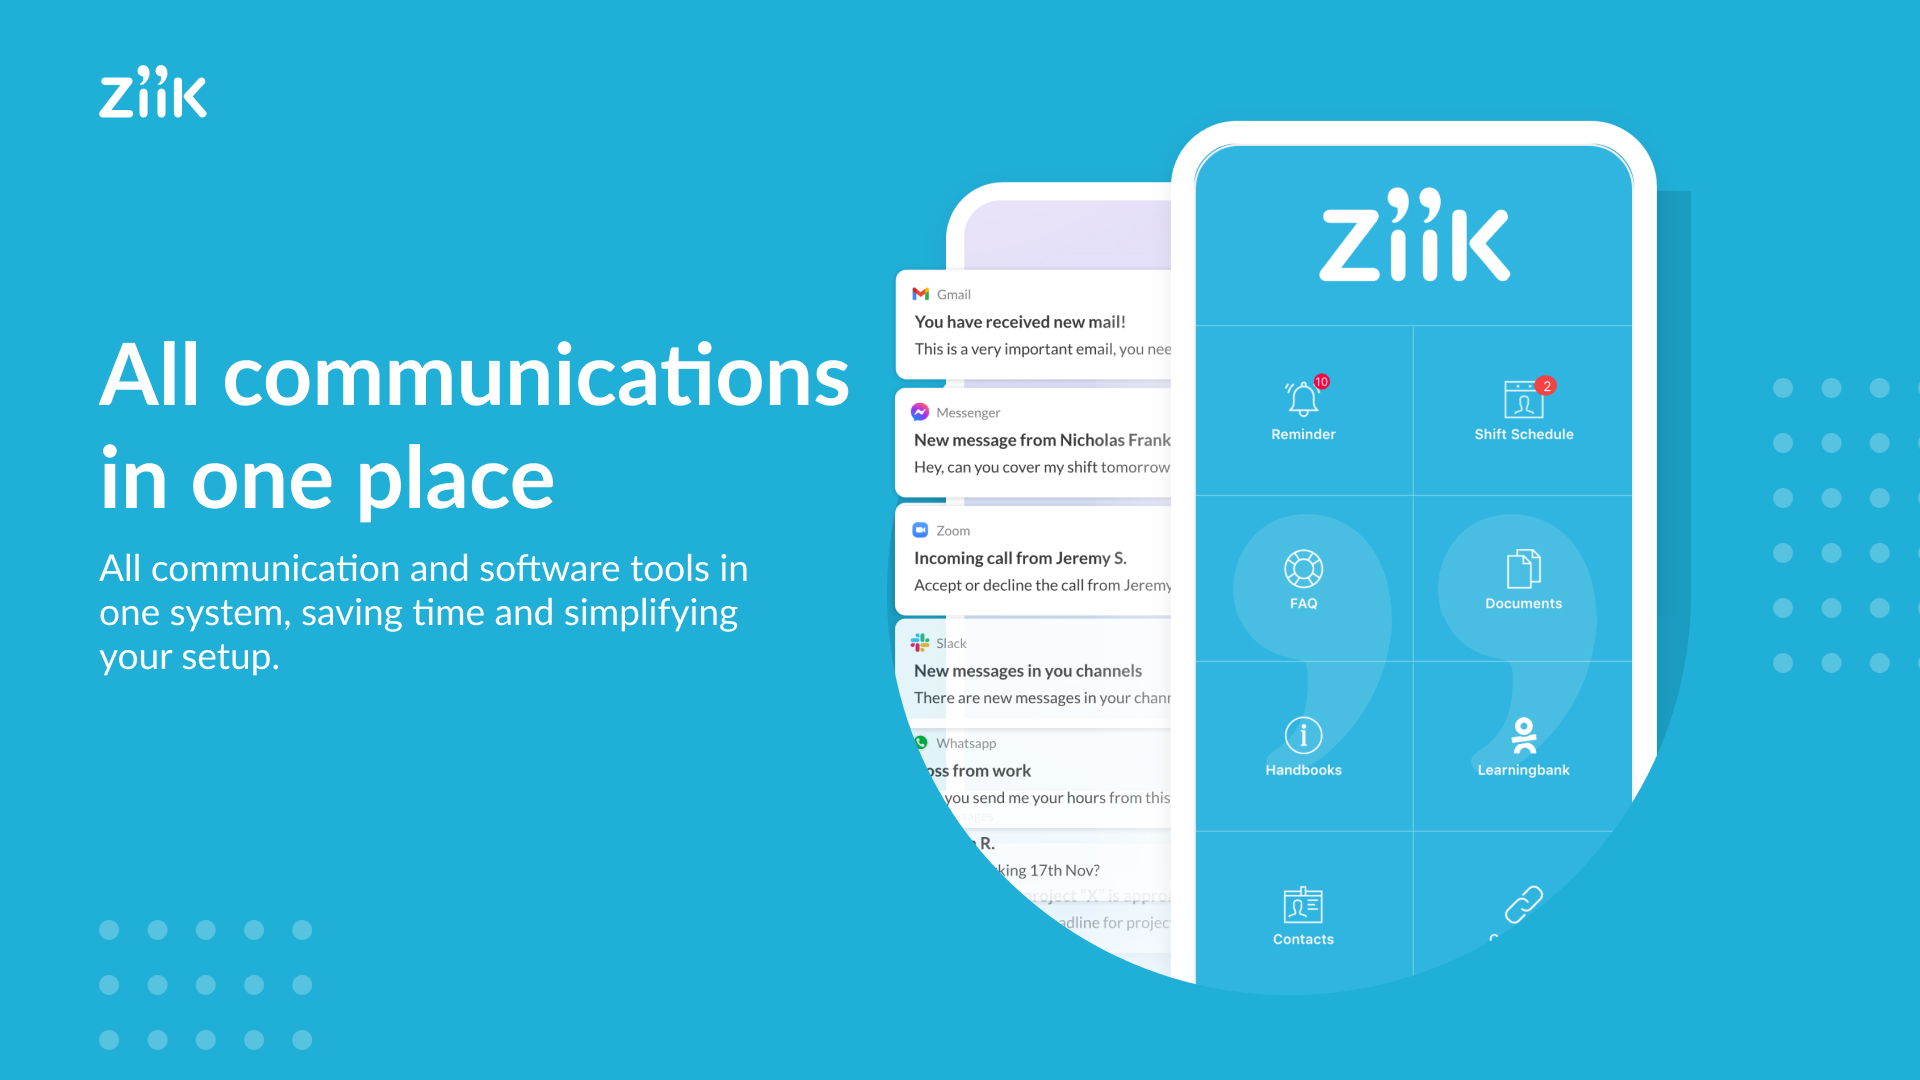 Ziik - The Social Intranet Software